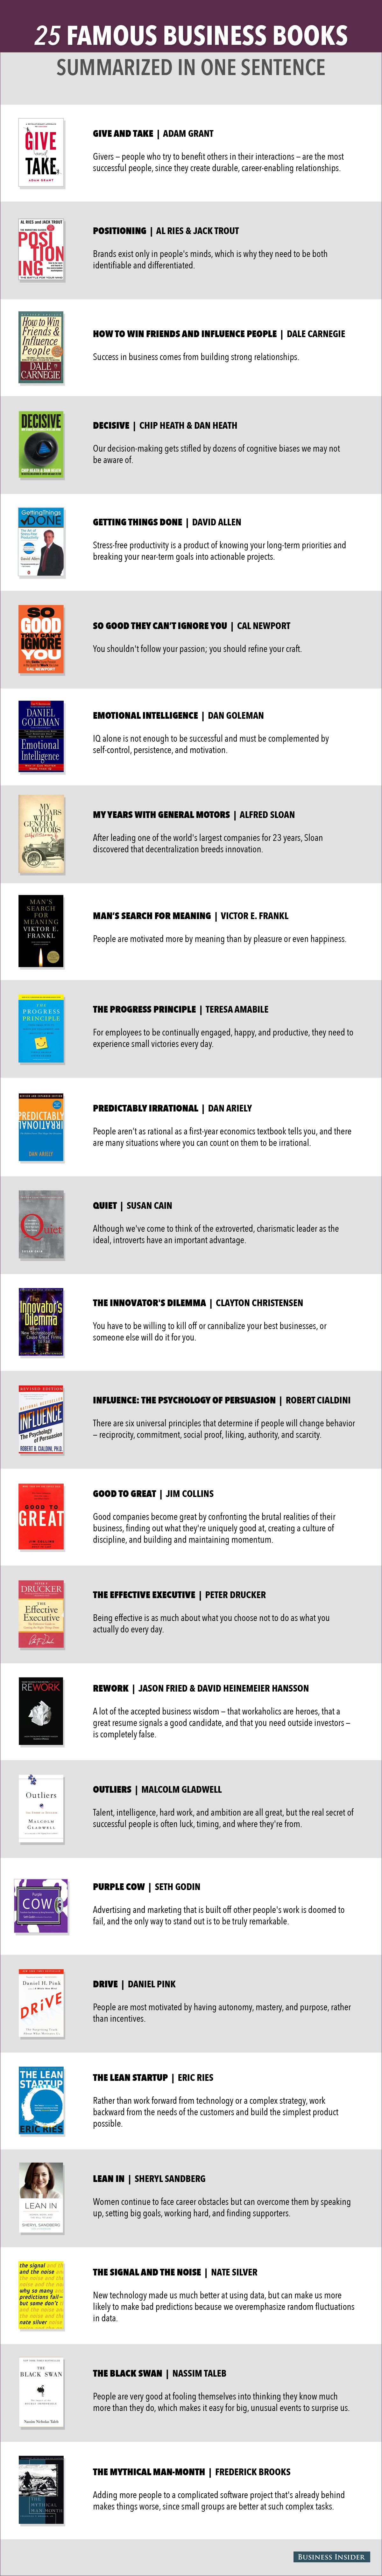 25 Popular Business Books Summarized In One Sentence Each